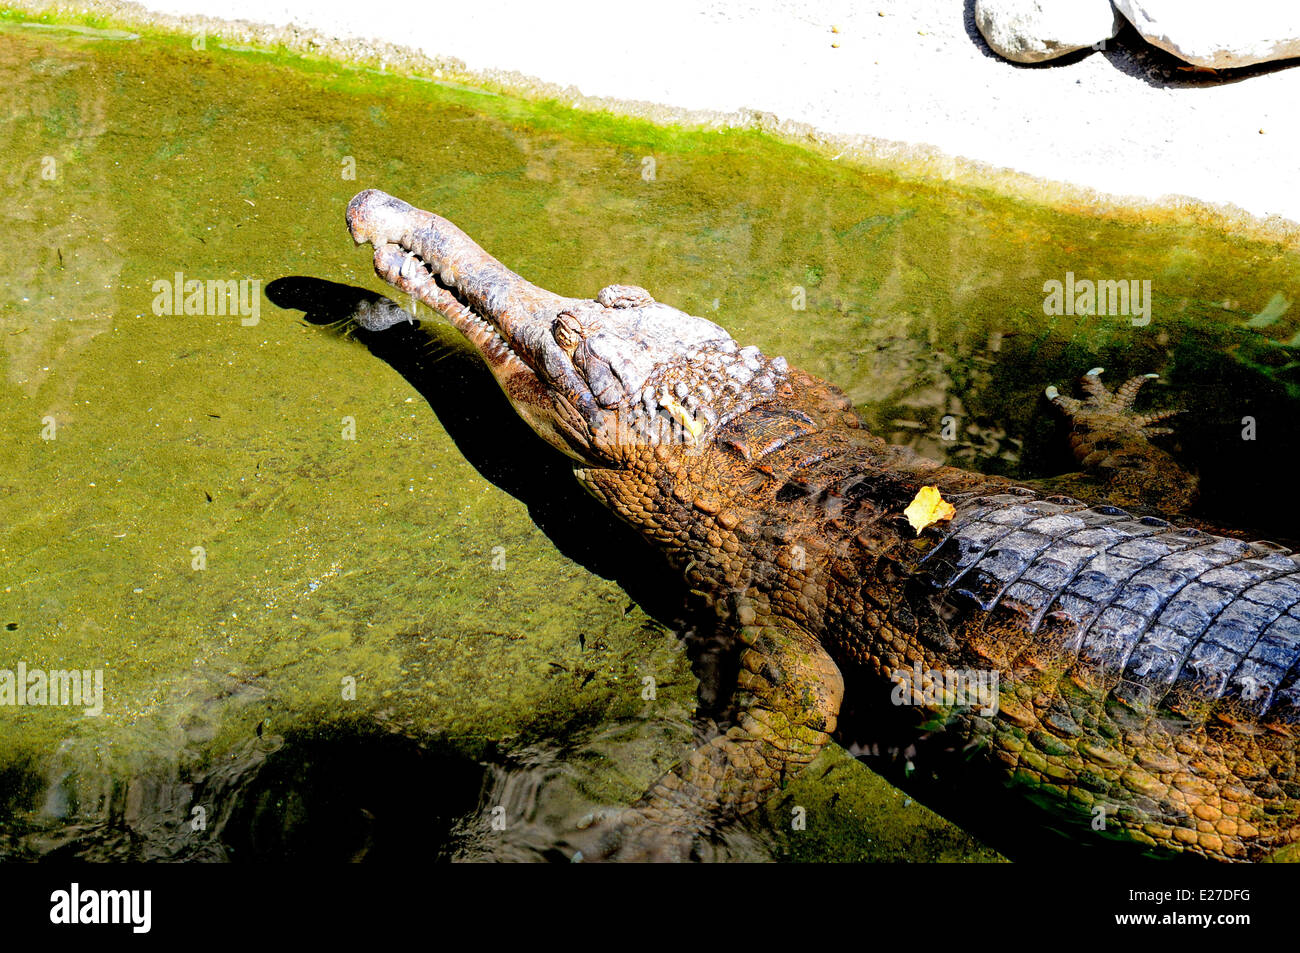 Gavial Crocodile (Gavialis gangeticus) at the waters edge. Stock Photo